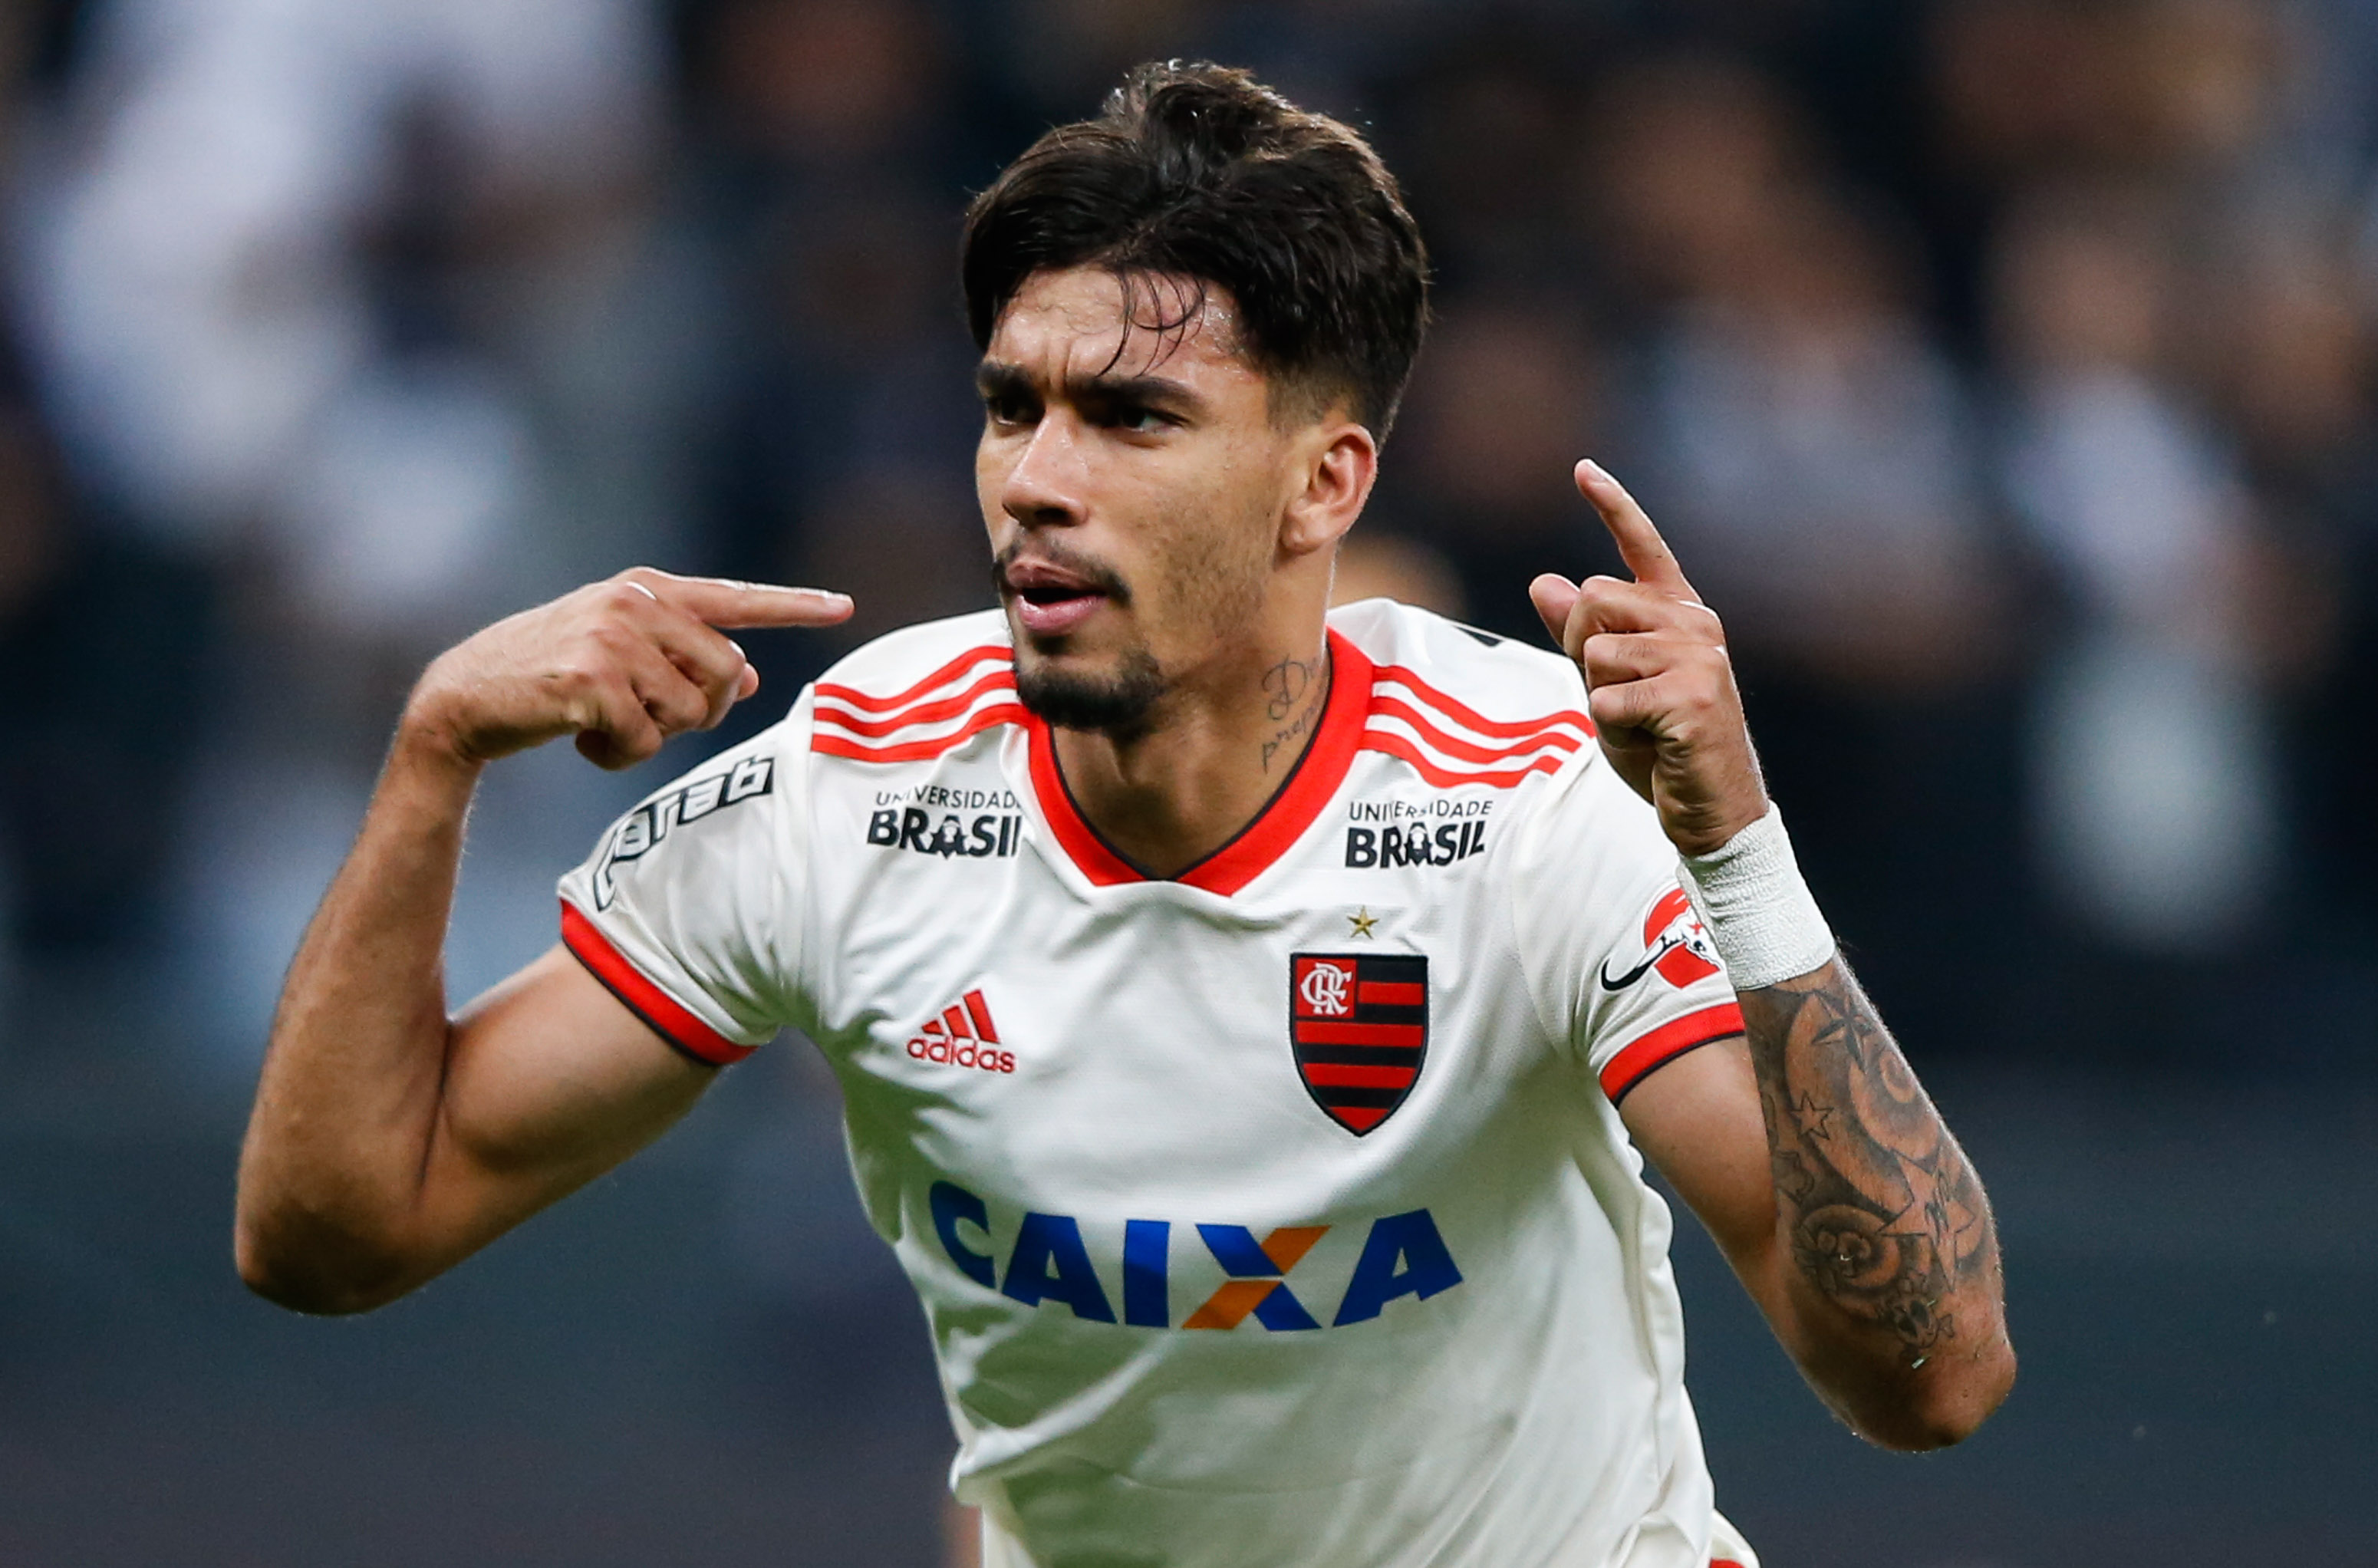 Flamengo Director confirms Paqueta to Milan in Janaury window